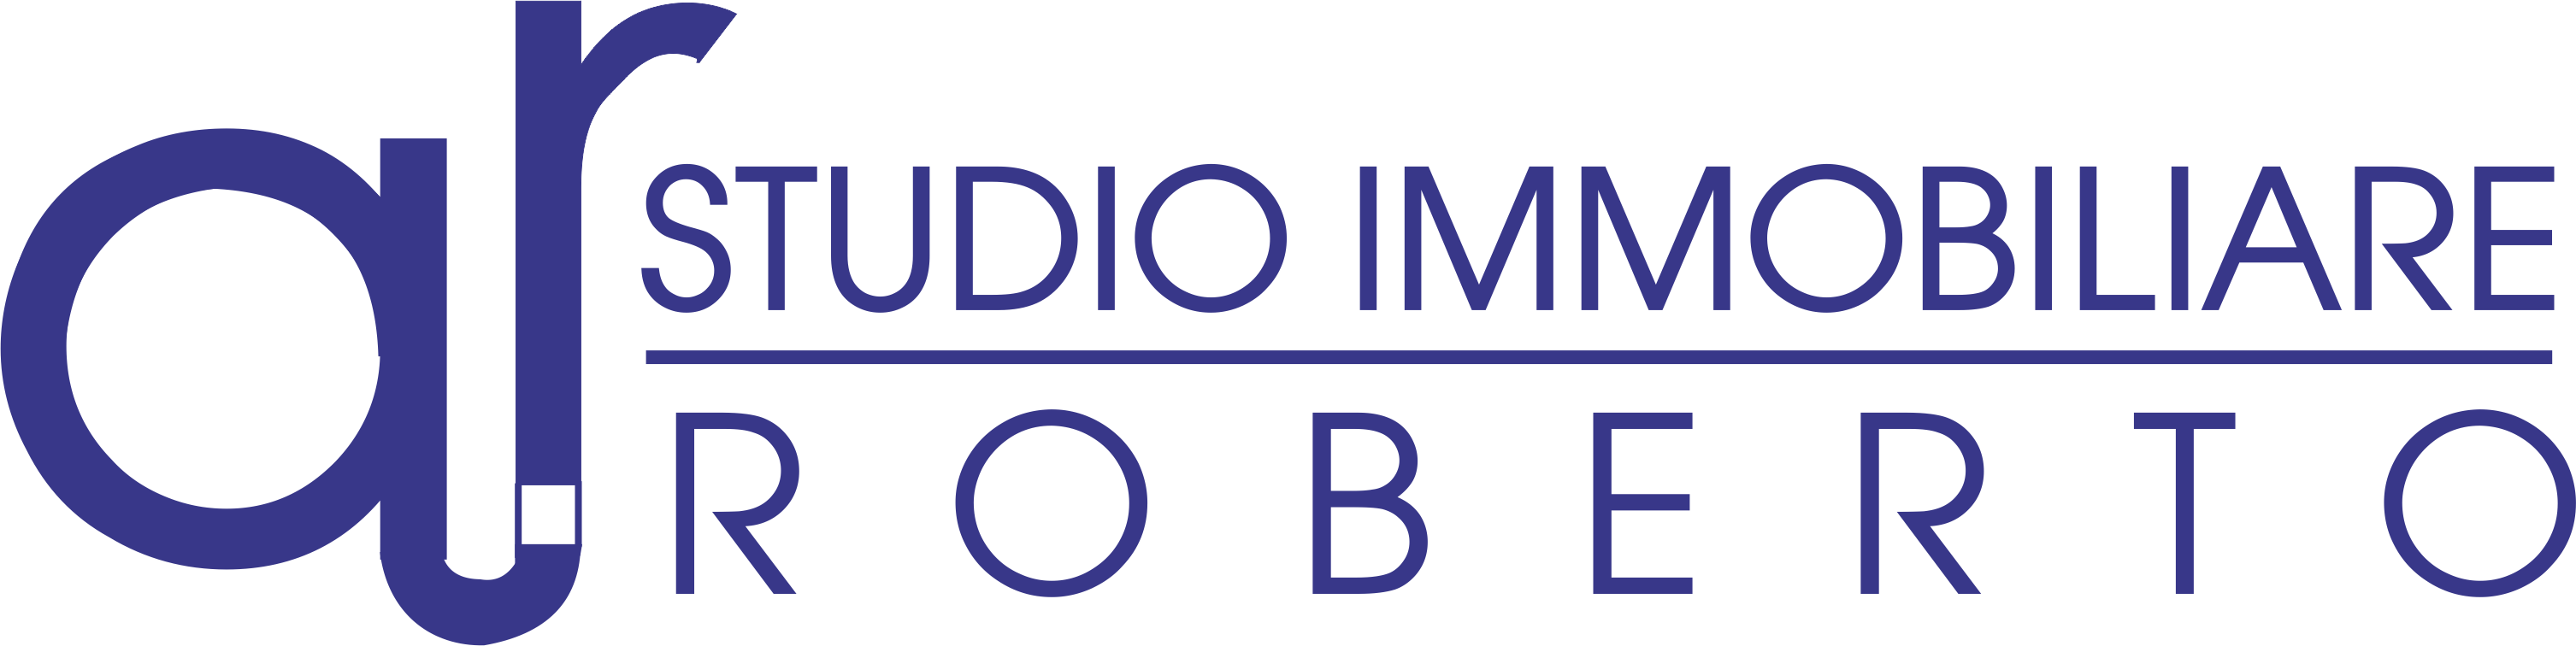 Logo - AR STUDIO IMMOBILIARE ROBERTO